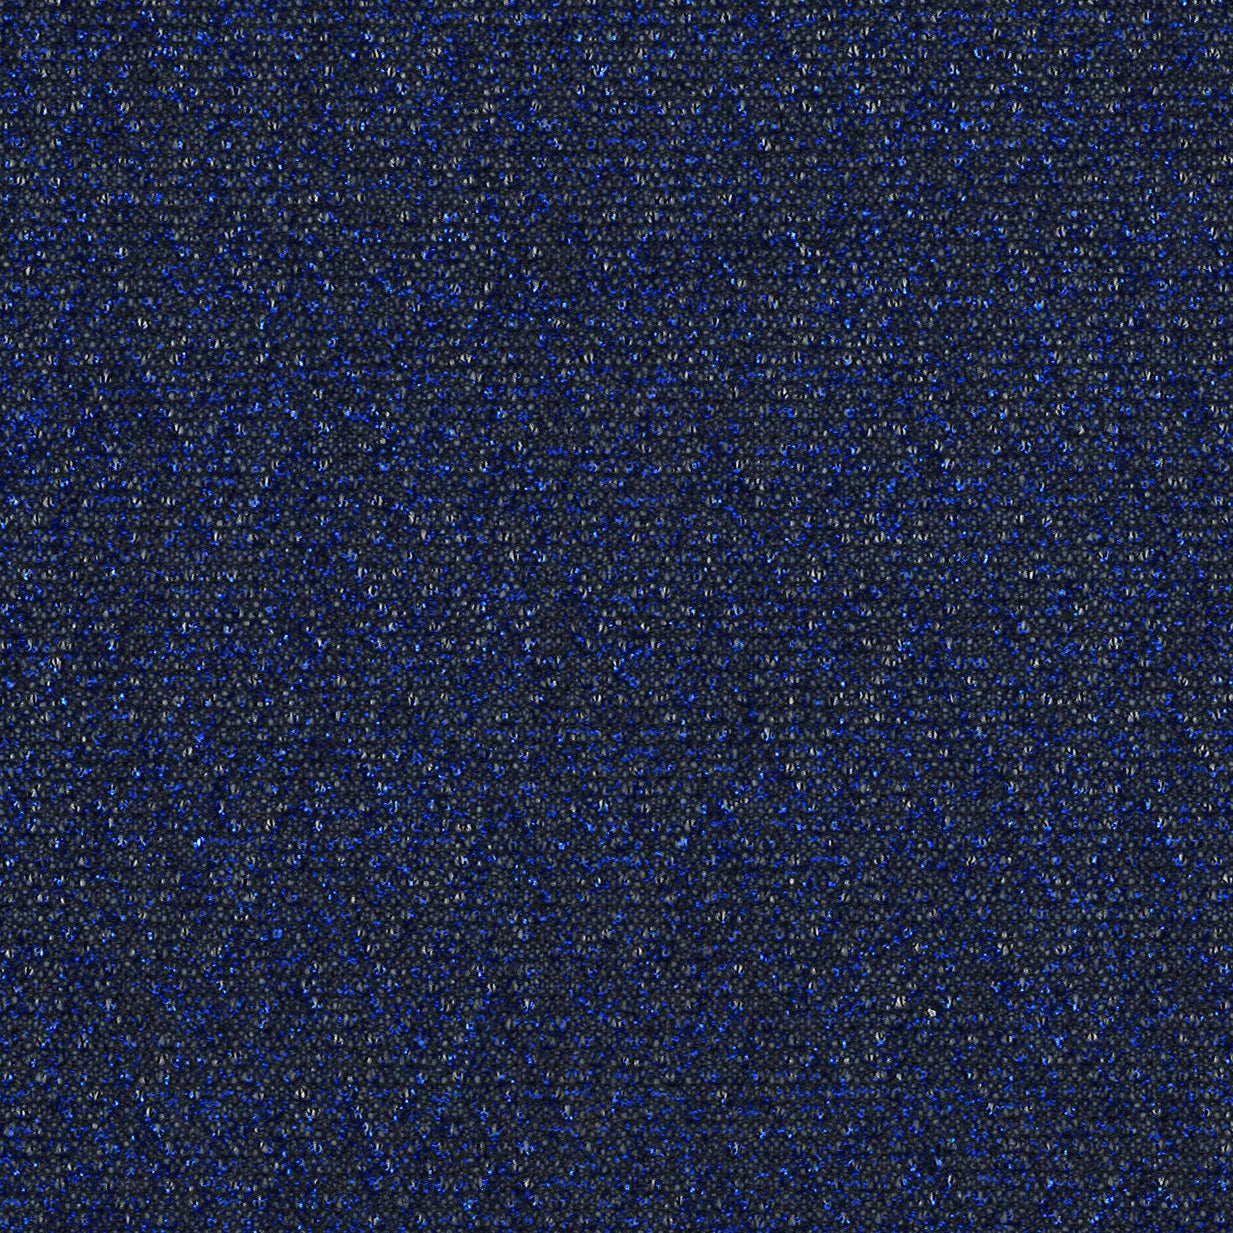 18010-06 Royal Blue Metallic Plain Dyed Blend blend blue knit metallic plain dyed polyester Metallic, Solid Color - knit fabric - woven fabric - fabric company - fabric wholesale - fabric b2b - fabric factory - high quality fabric - hong kong fabric - fabric hk - acetate fabric - cotton fabric - linen fabric - metallic fabric - nylon fabric - polyester fabric - spandex fabric - chun wing hing - cwh hk - fabric worldwide ship - 針織布 - 梳織布 - 布料公司- 布料批發 - 香港布料 - 秦榮興